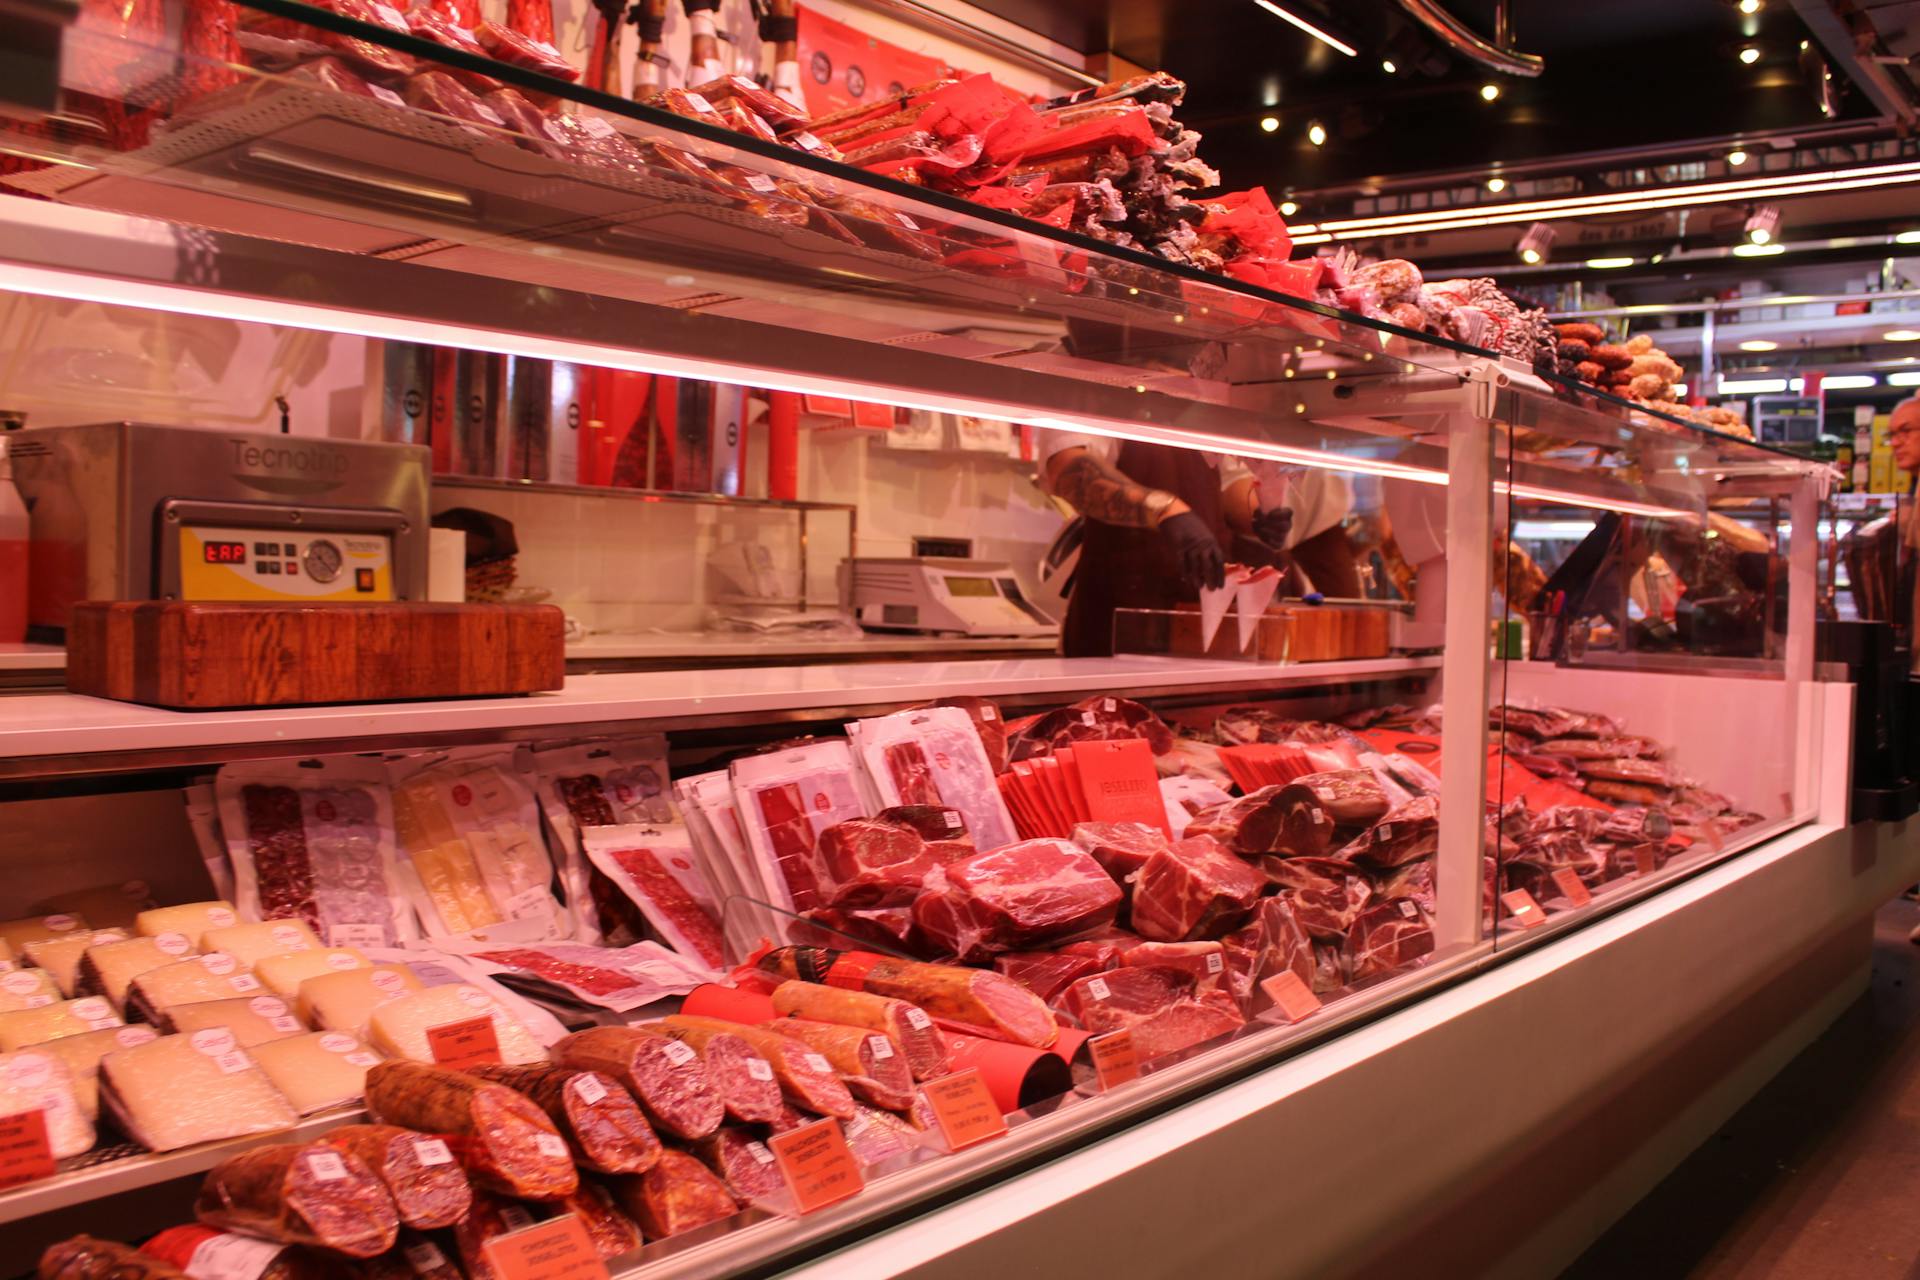 Meat section inside a supermarket | Source: Pexels